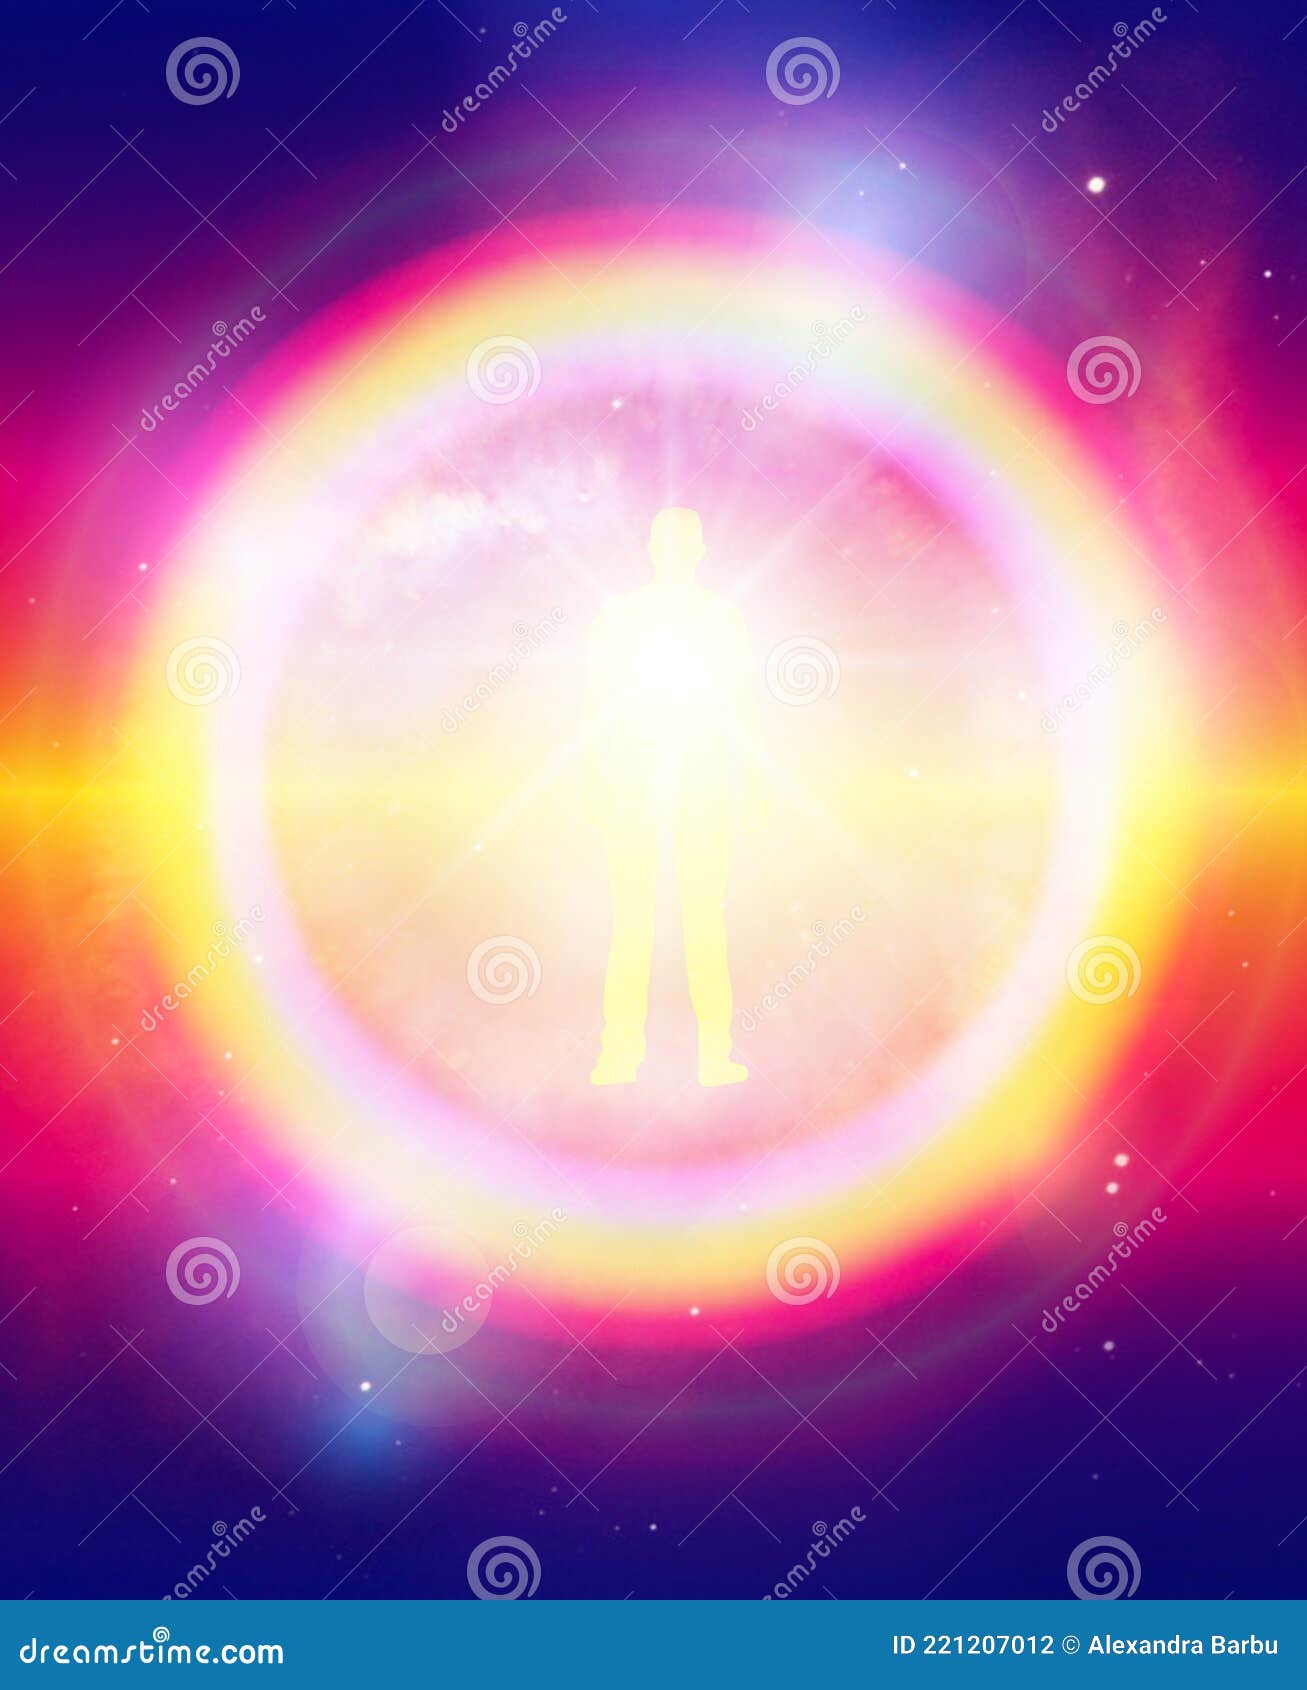 spiritual energy rainbow healing power, conscience awakening, meditation, expansion